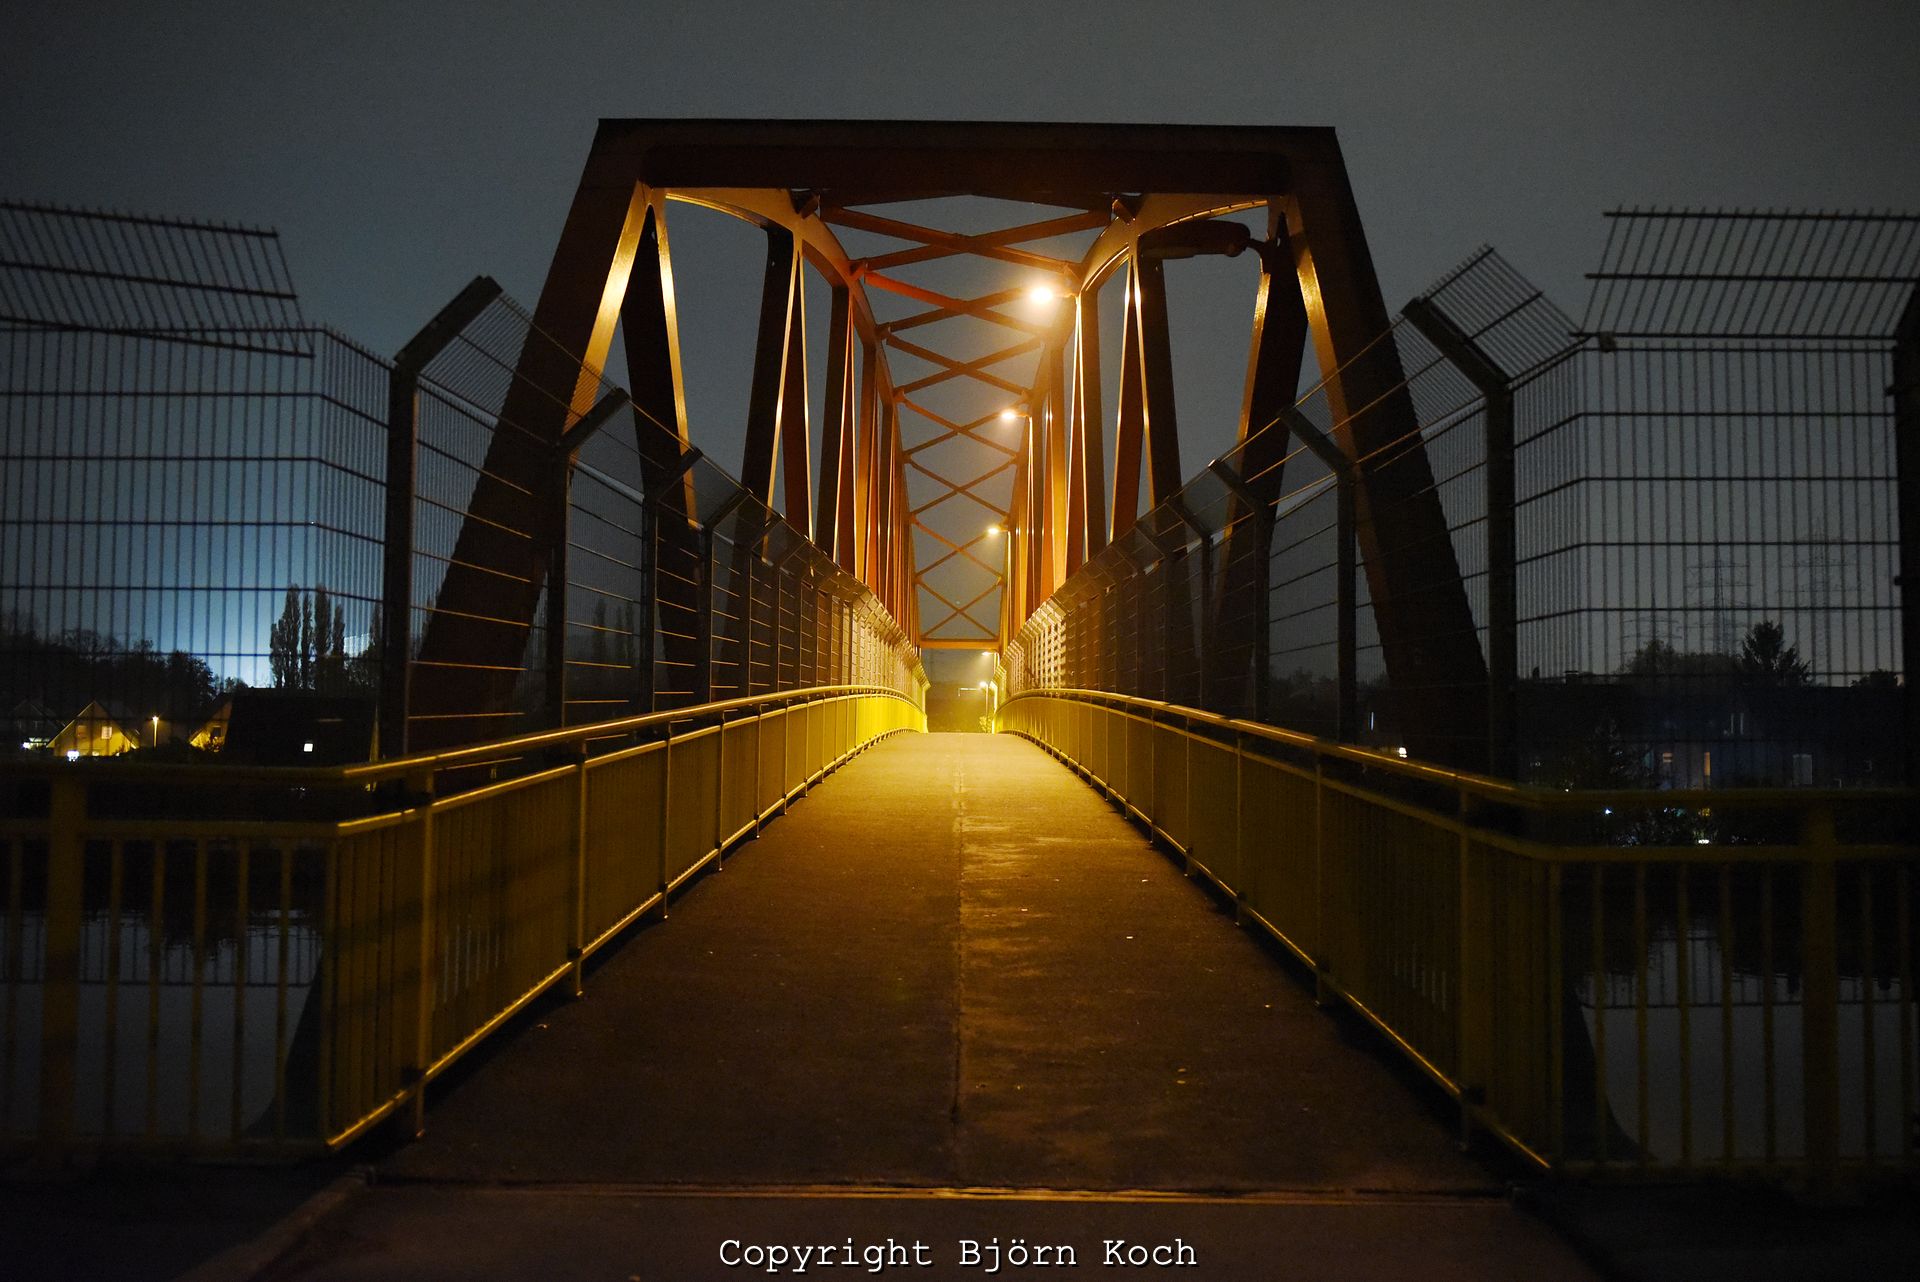 15.11.2019, Herne, Papageienbrücke am Abend. Bild: Die Papageienbrücke über den Rhein-Herne-Kanal am Abend des 15. November 2019 - Foto: Björn Koch